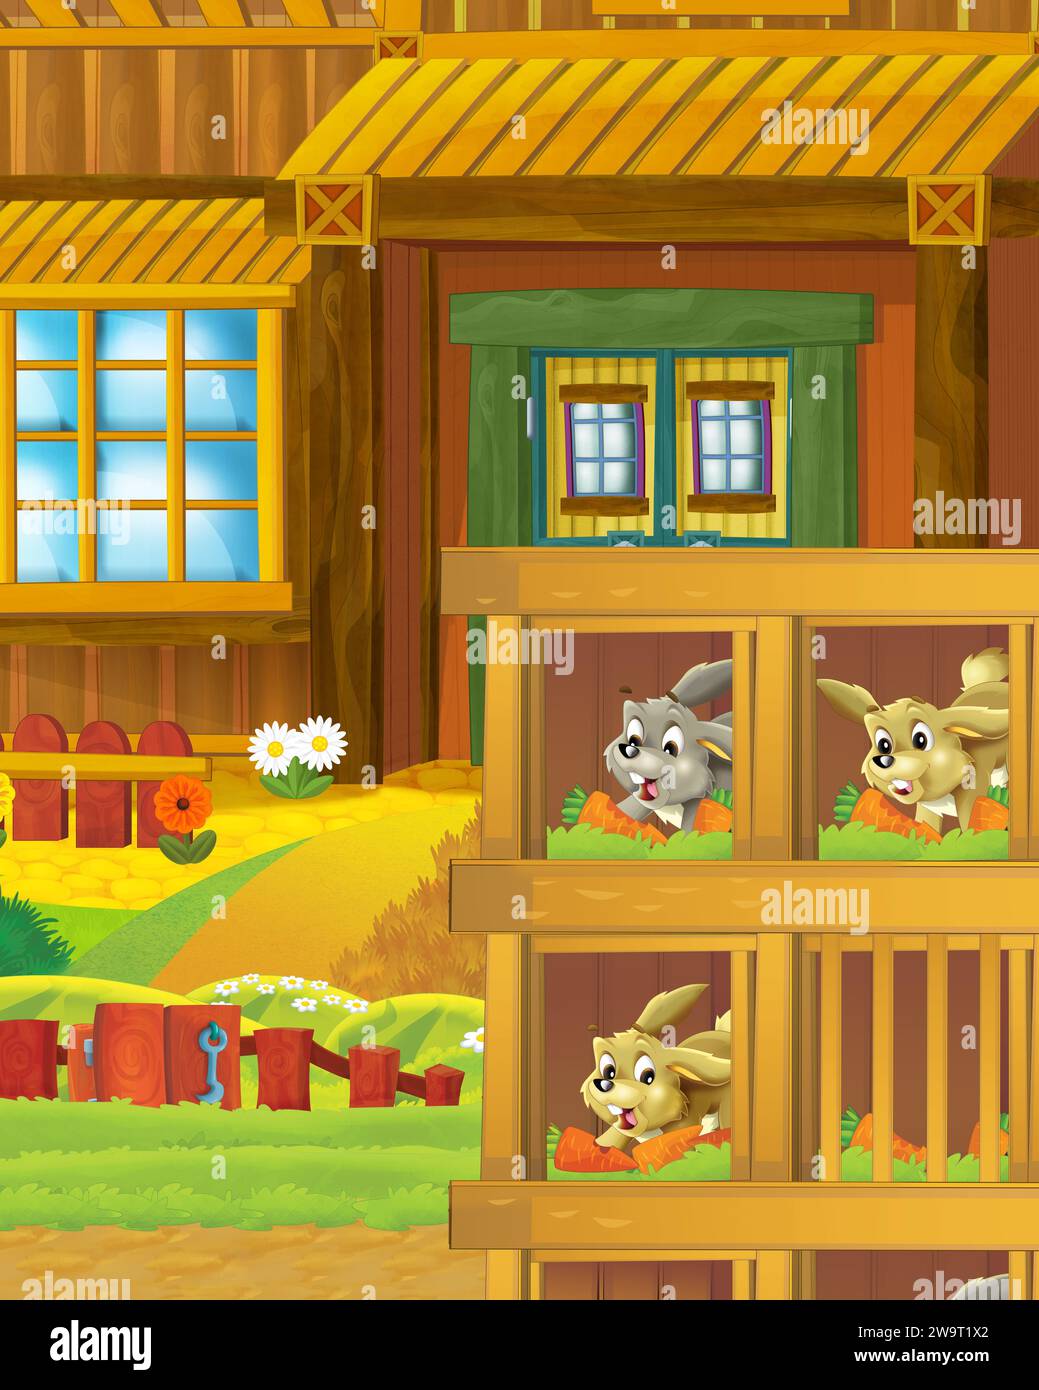 Cartoon farm scene with animal rabbit having fun on the farm ranch - illustration for children Stock Photo